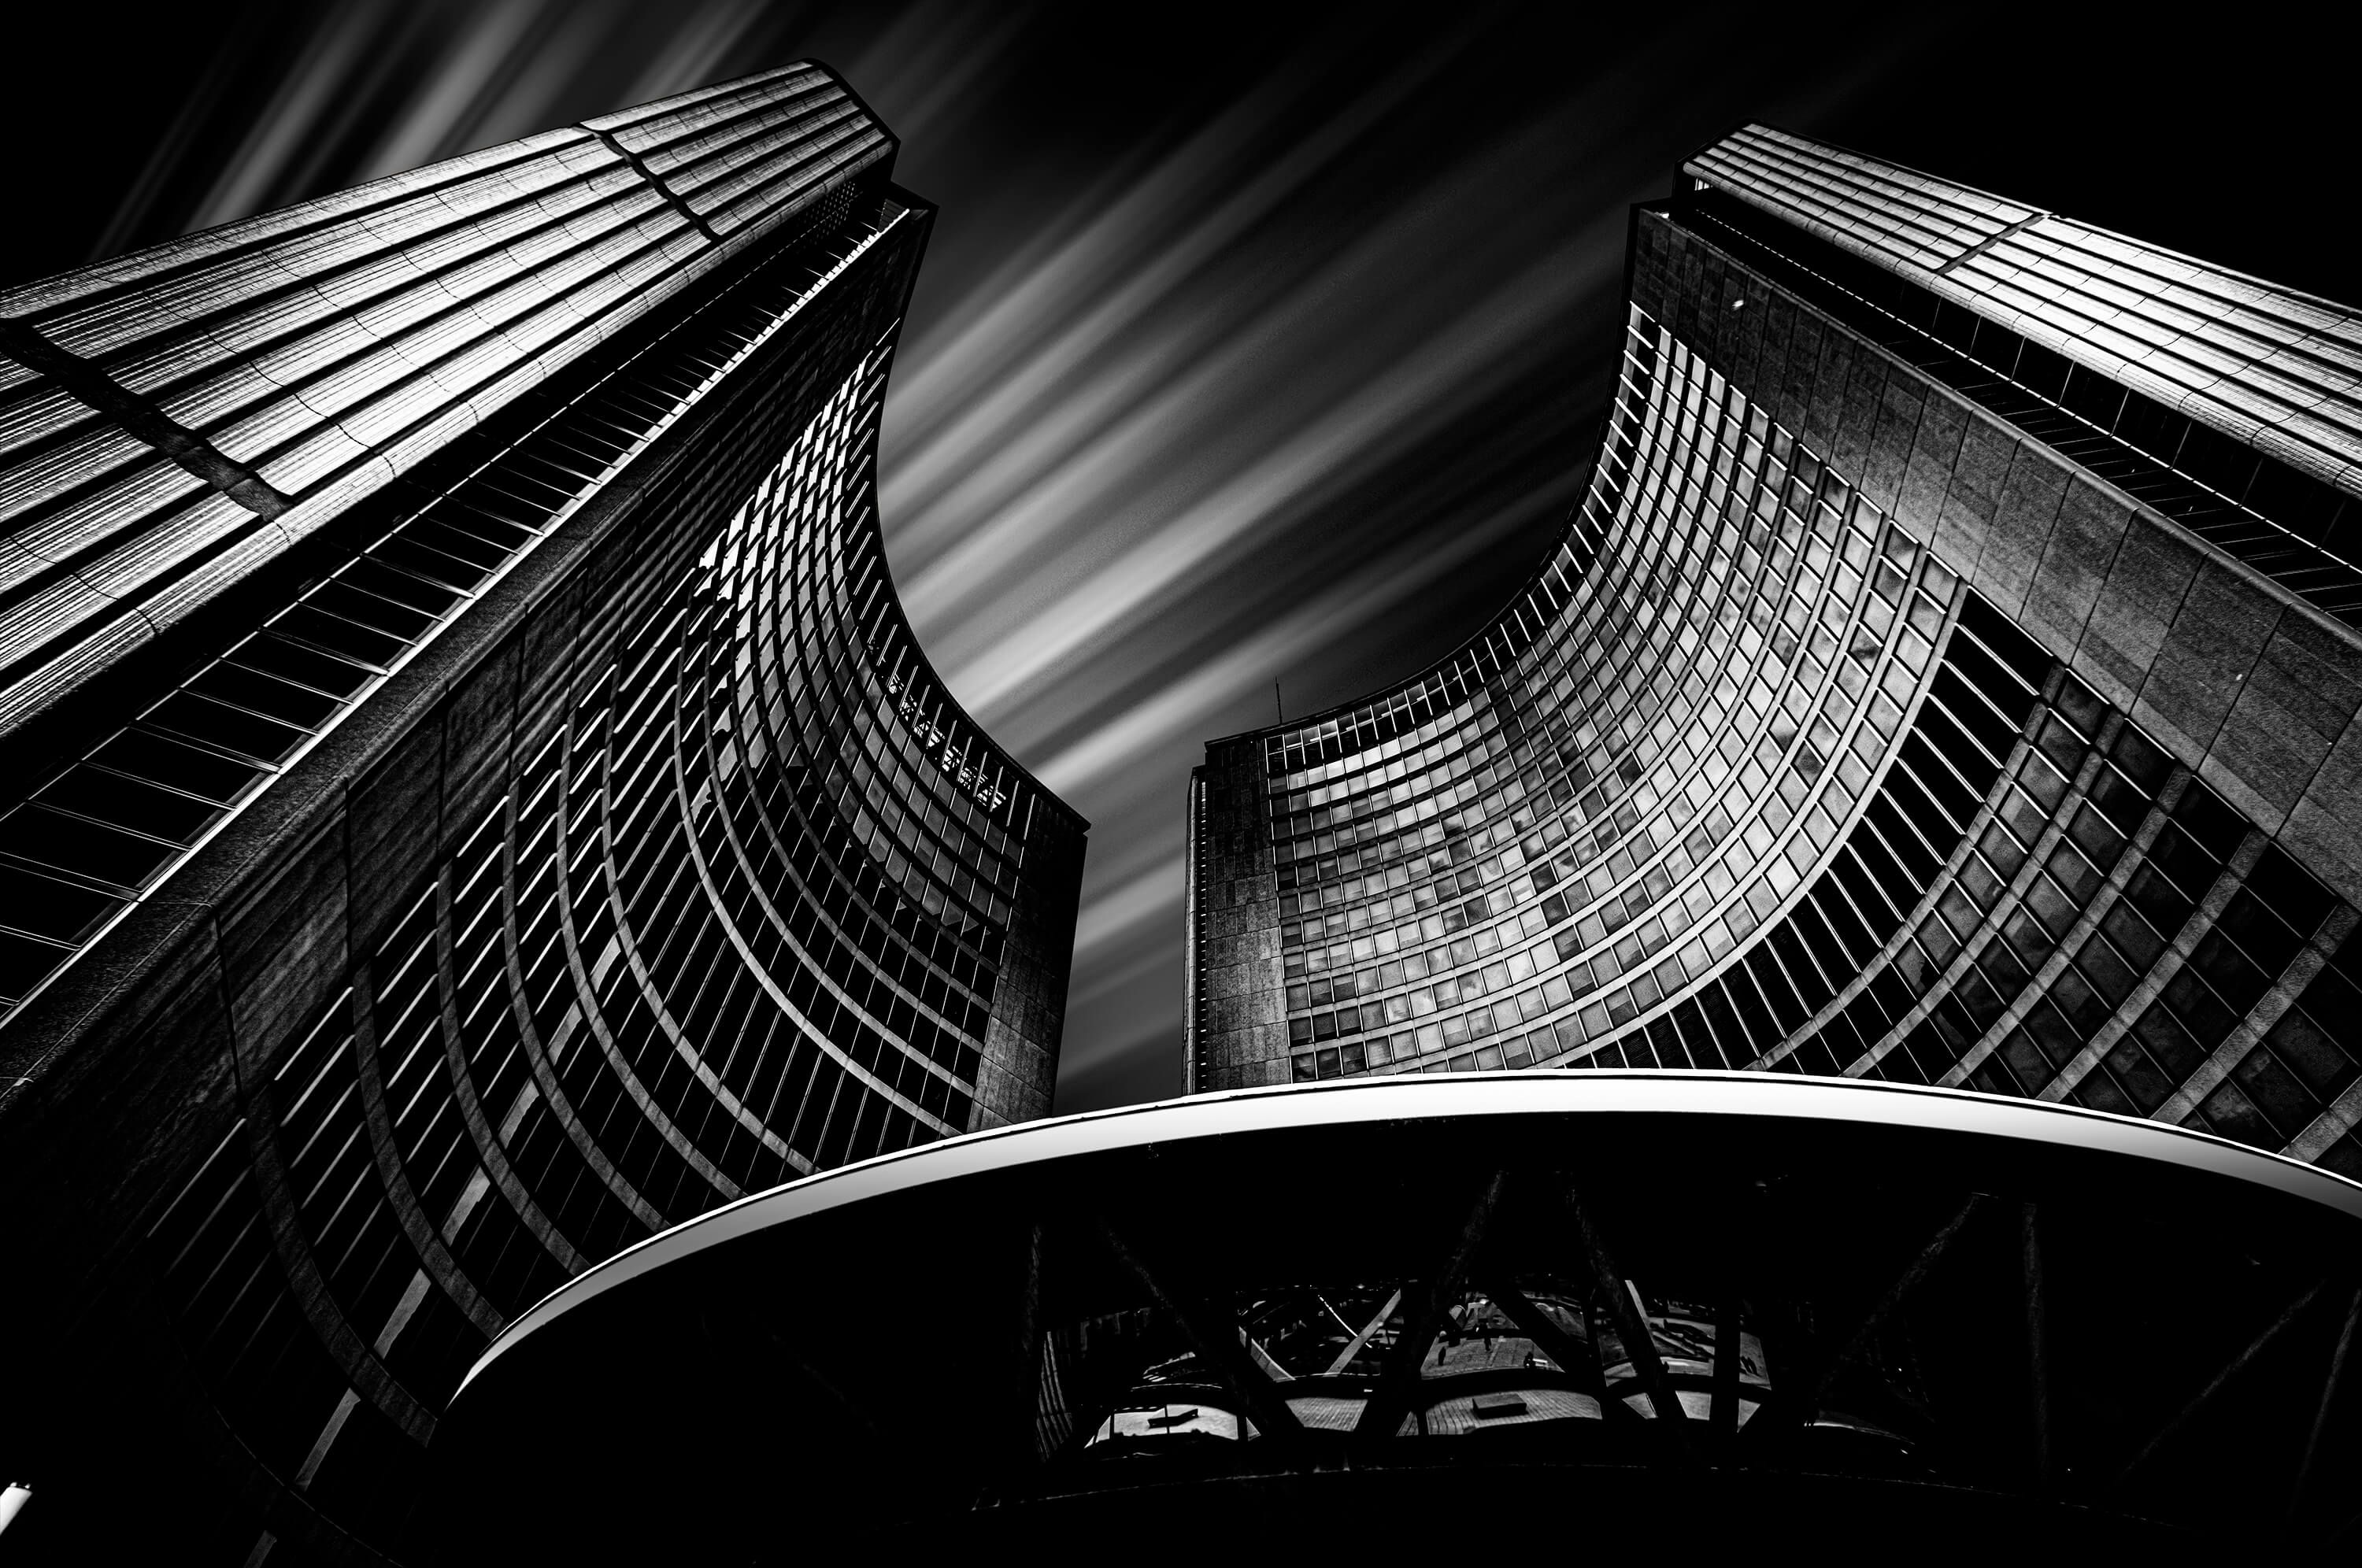 Creative-edit The City Hall - Toronto